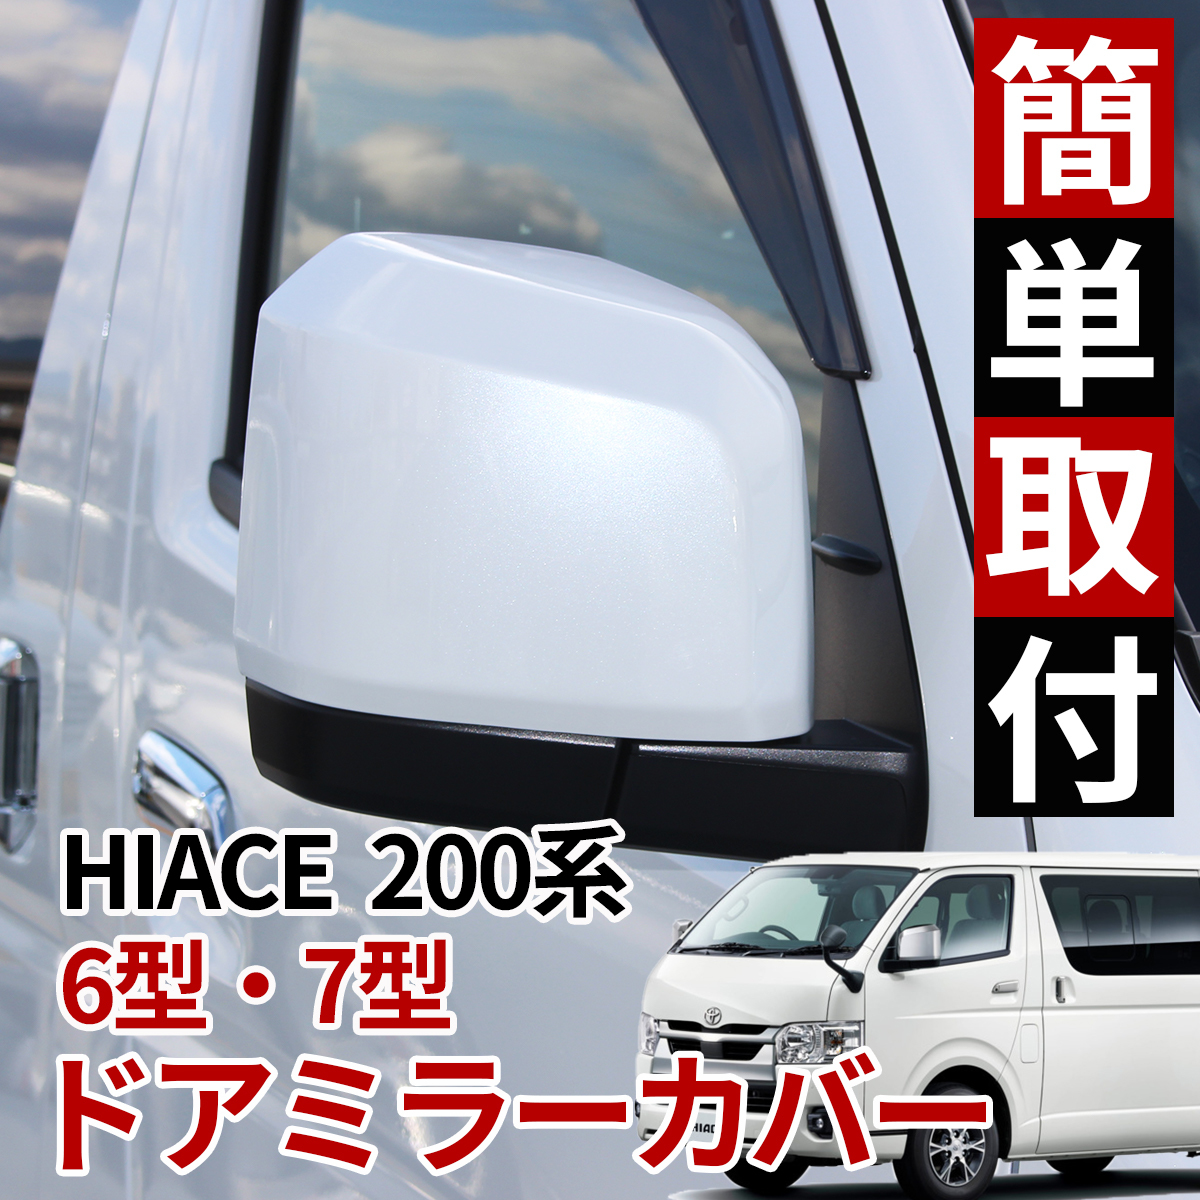 HIACE ハイエース 200系 6型 ドア ミラーカバー 070 パール ホワイト 塗装品 ドアミラーカバー 車検 対応 純正色 塗装済み 1の画像2